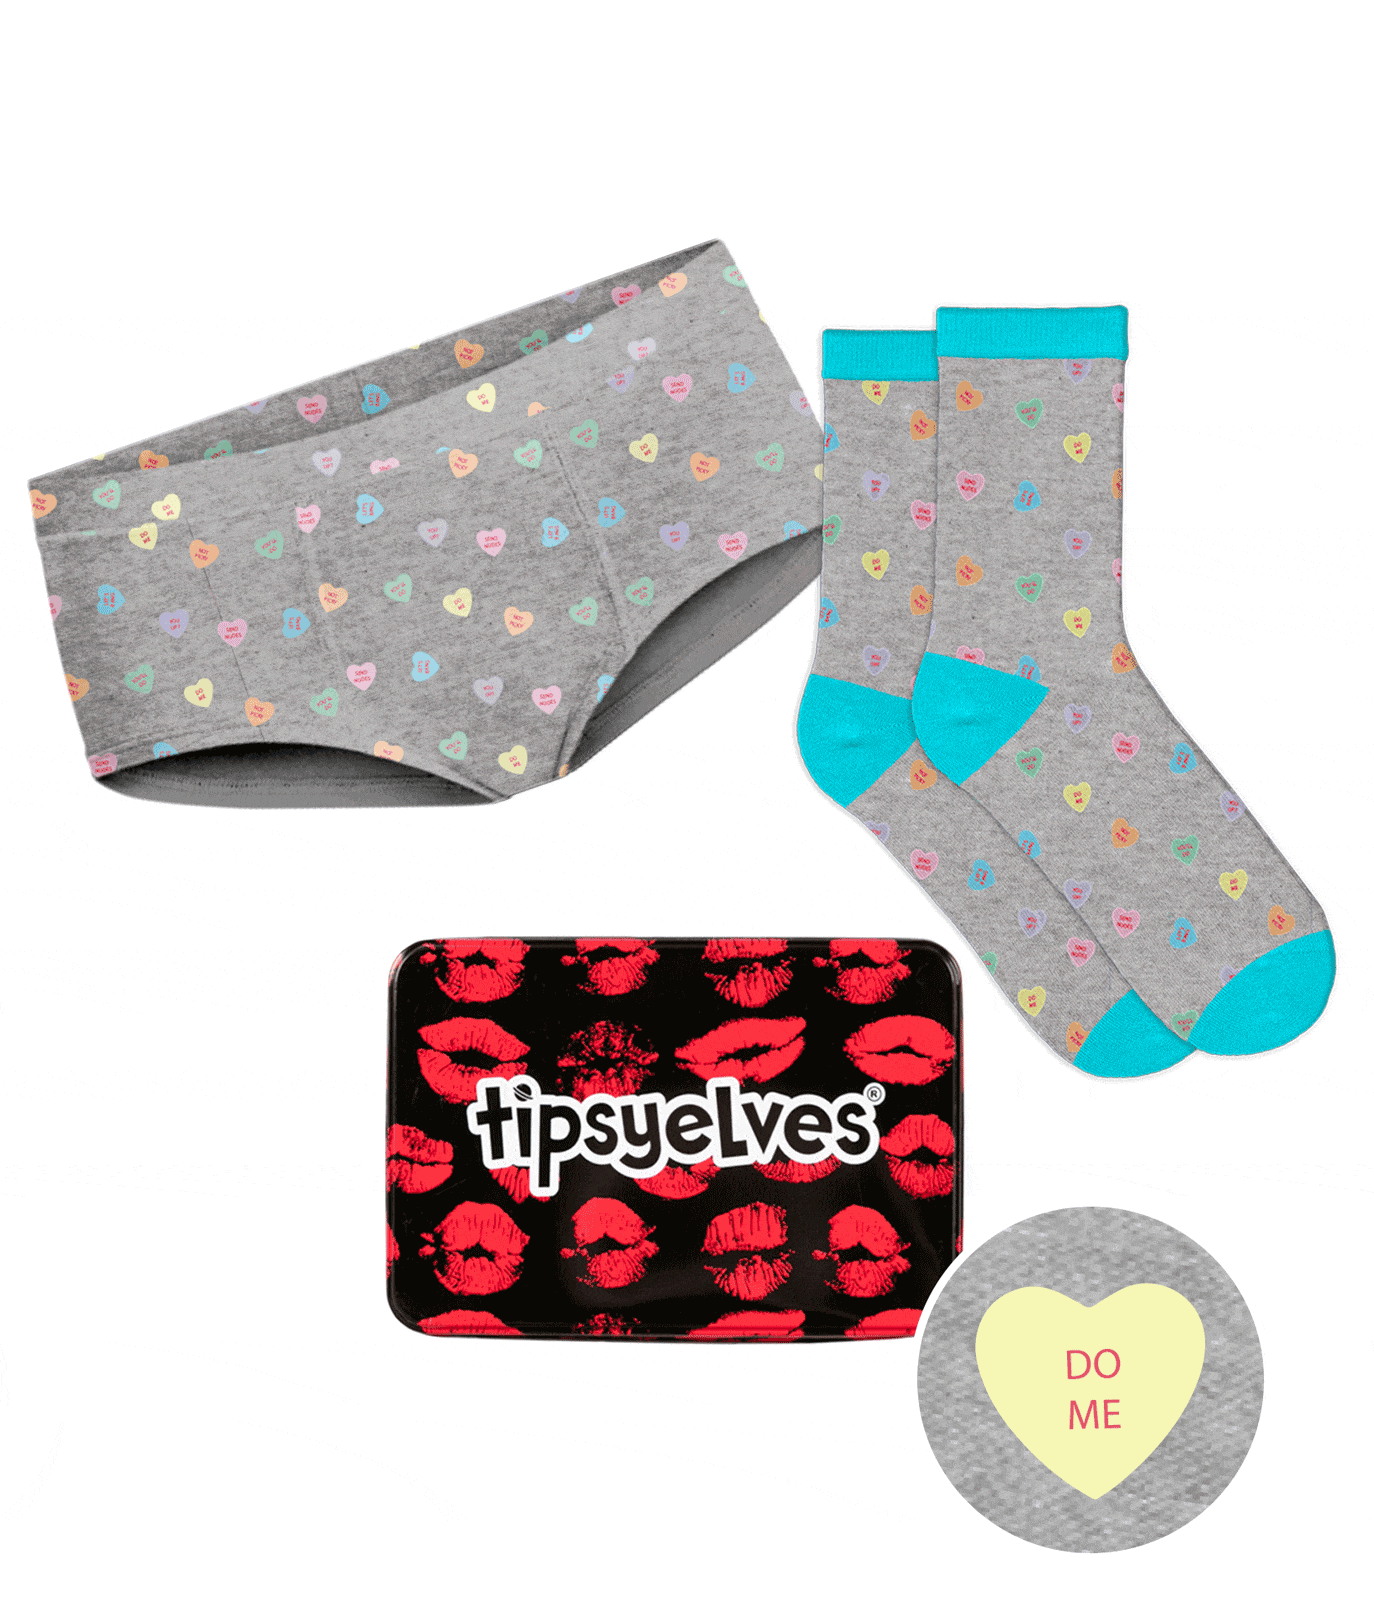 Candy Hearts Underwear & Socks Gift Set: Women's Valentine's Gifts